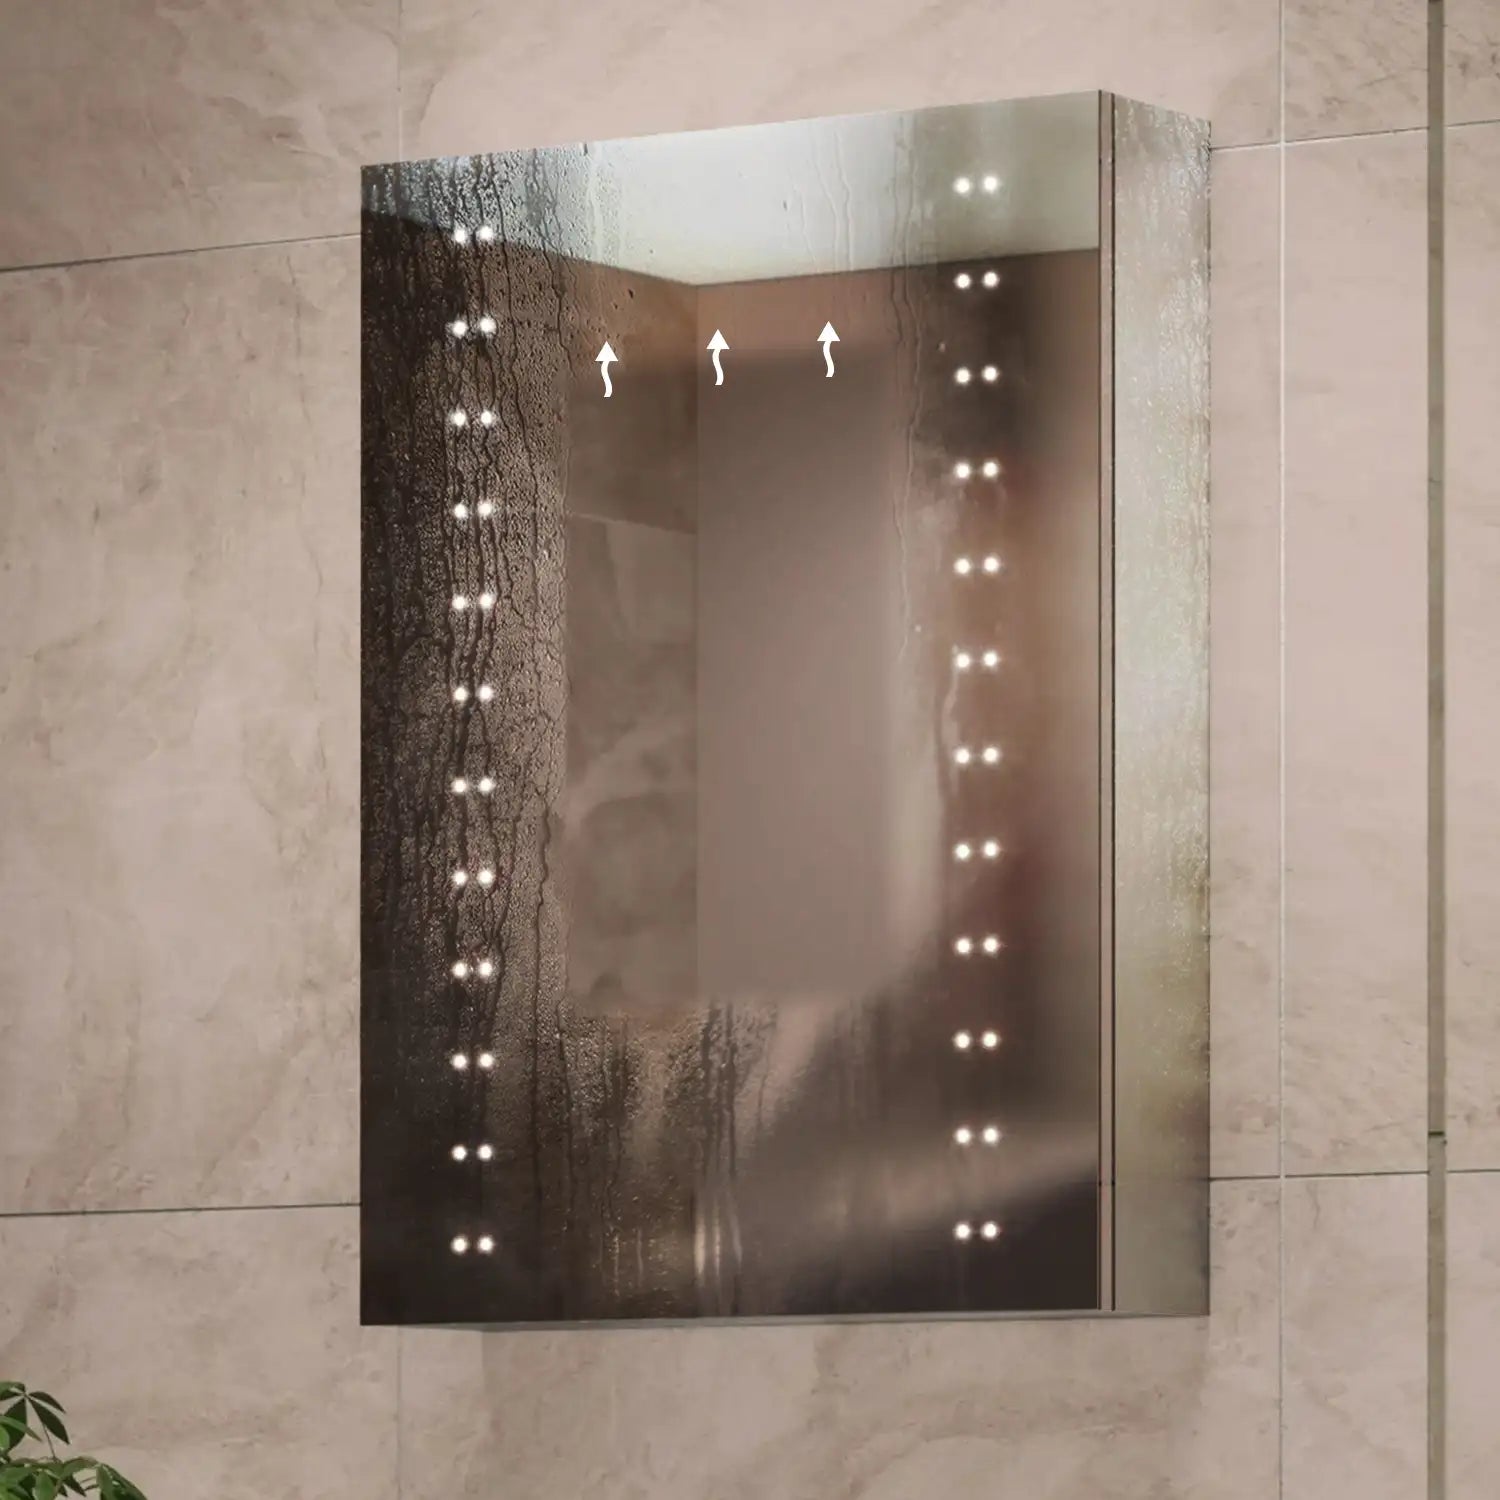 Hollis 500x700mm LED Illuminated Bathroom Mirror Cabinet #door-hinge-side_right-hinged